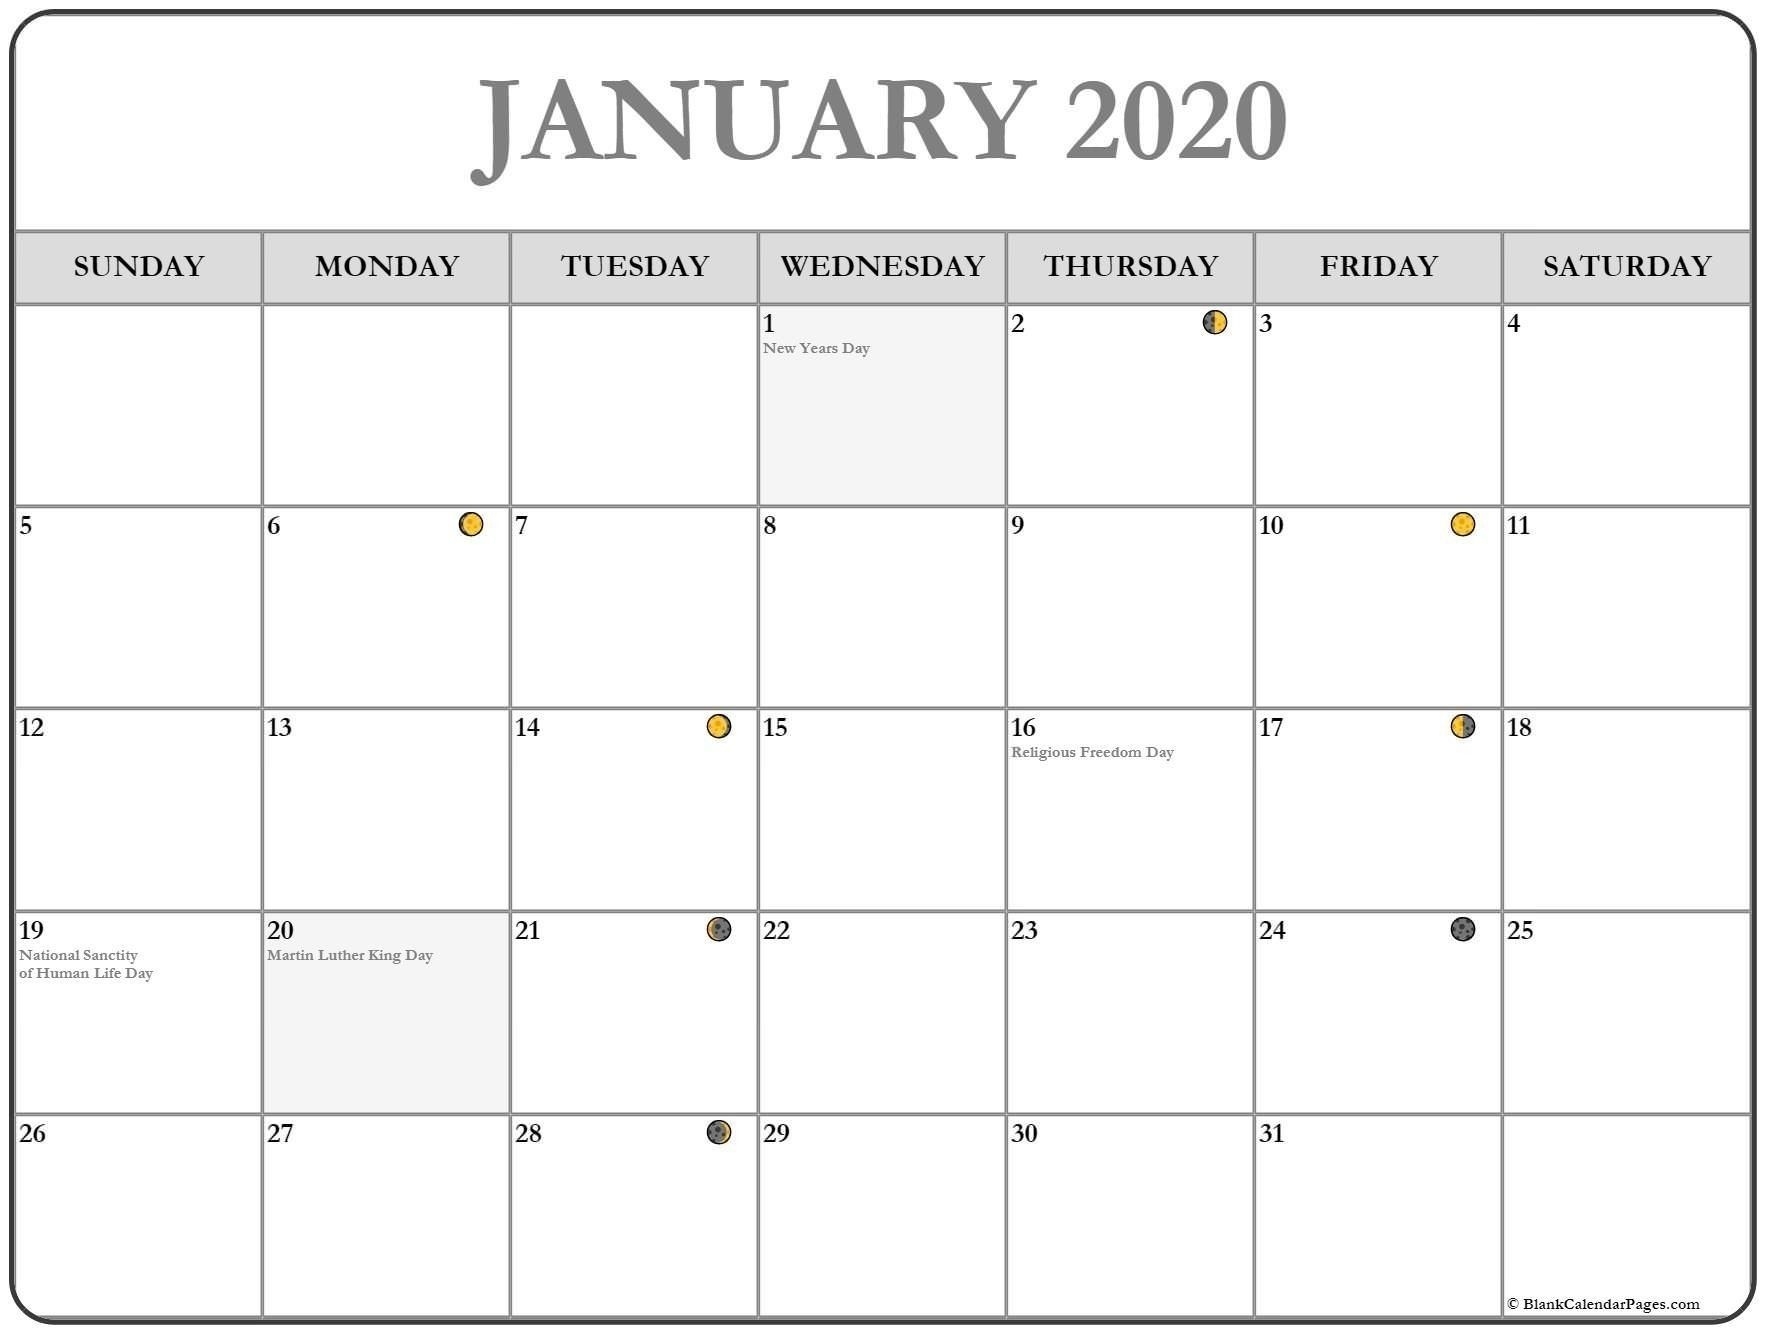 January 2020 Lunar Calendar | Monthly Calendar Template 2020 Calender With Luner Dates